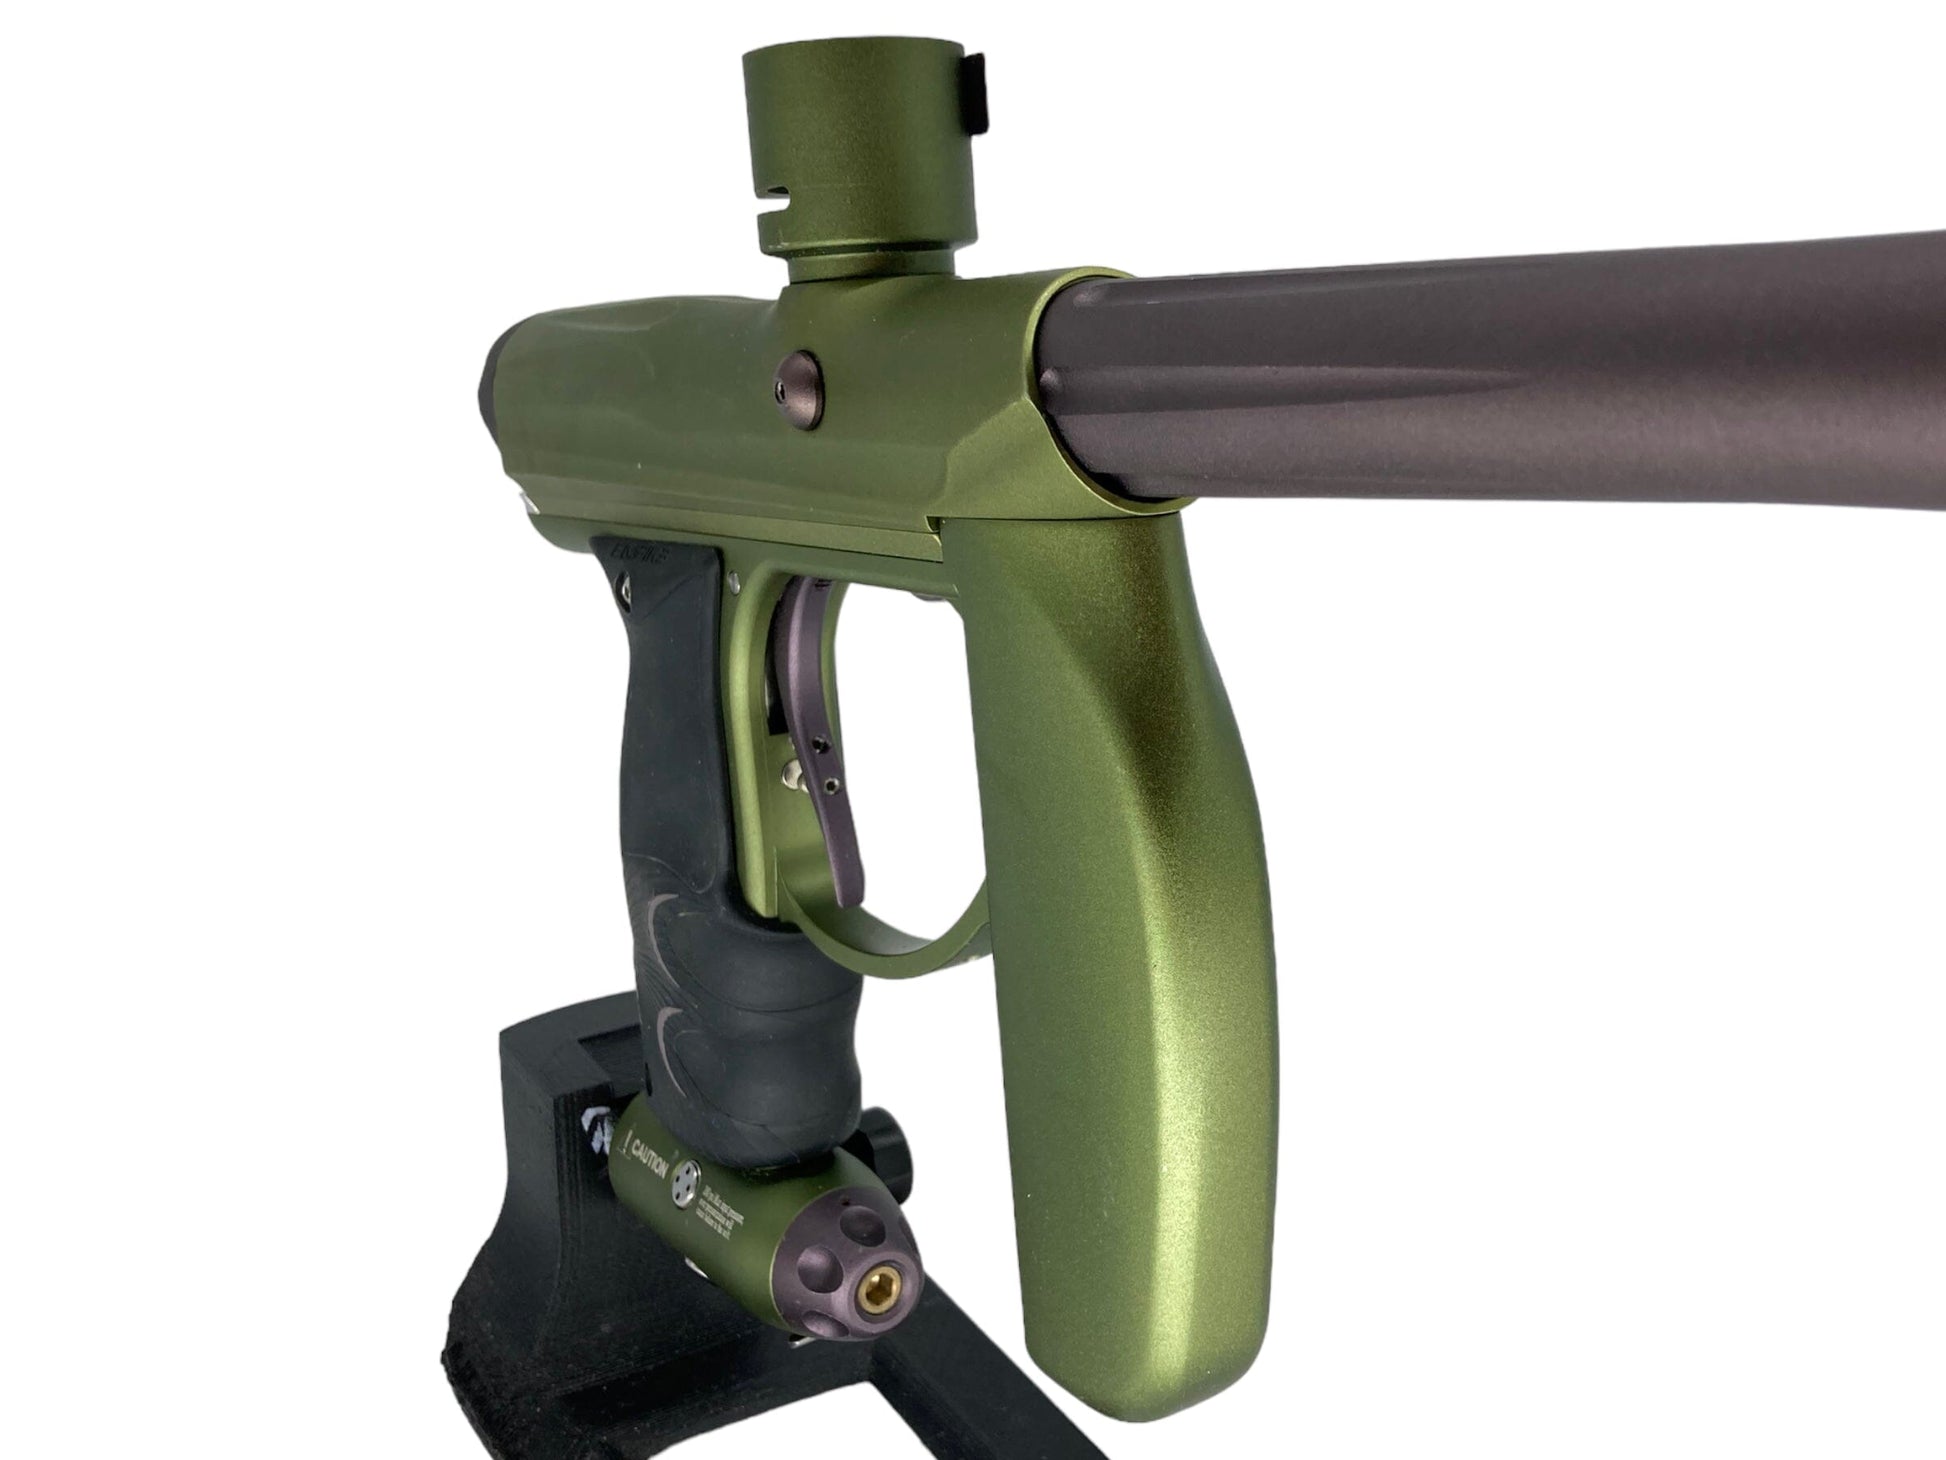 Used Empire Axe Paintball Gun Paintball Gun from CPXBrosPaintball Buy/Sell/Trade Paintball Markers, New Paintball Guns, Paintball Hoppers, Paintball Masks, and Hormesis Headbands